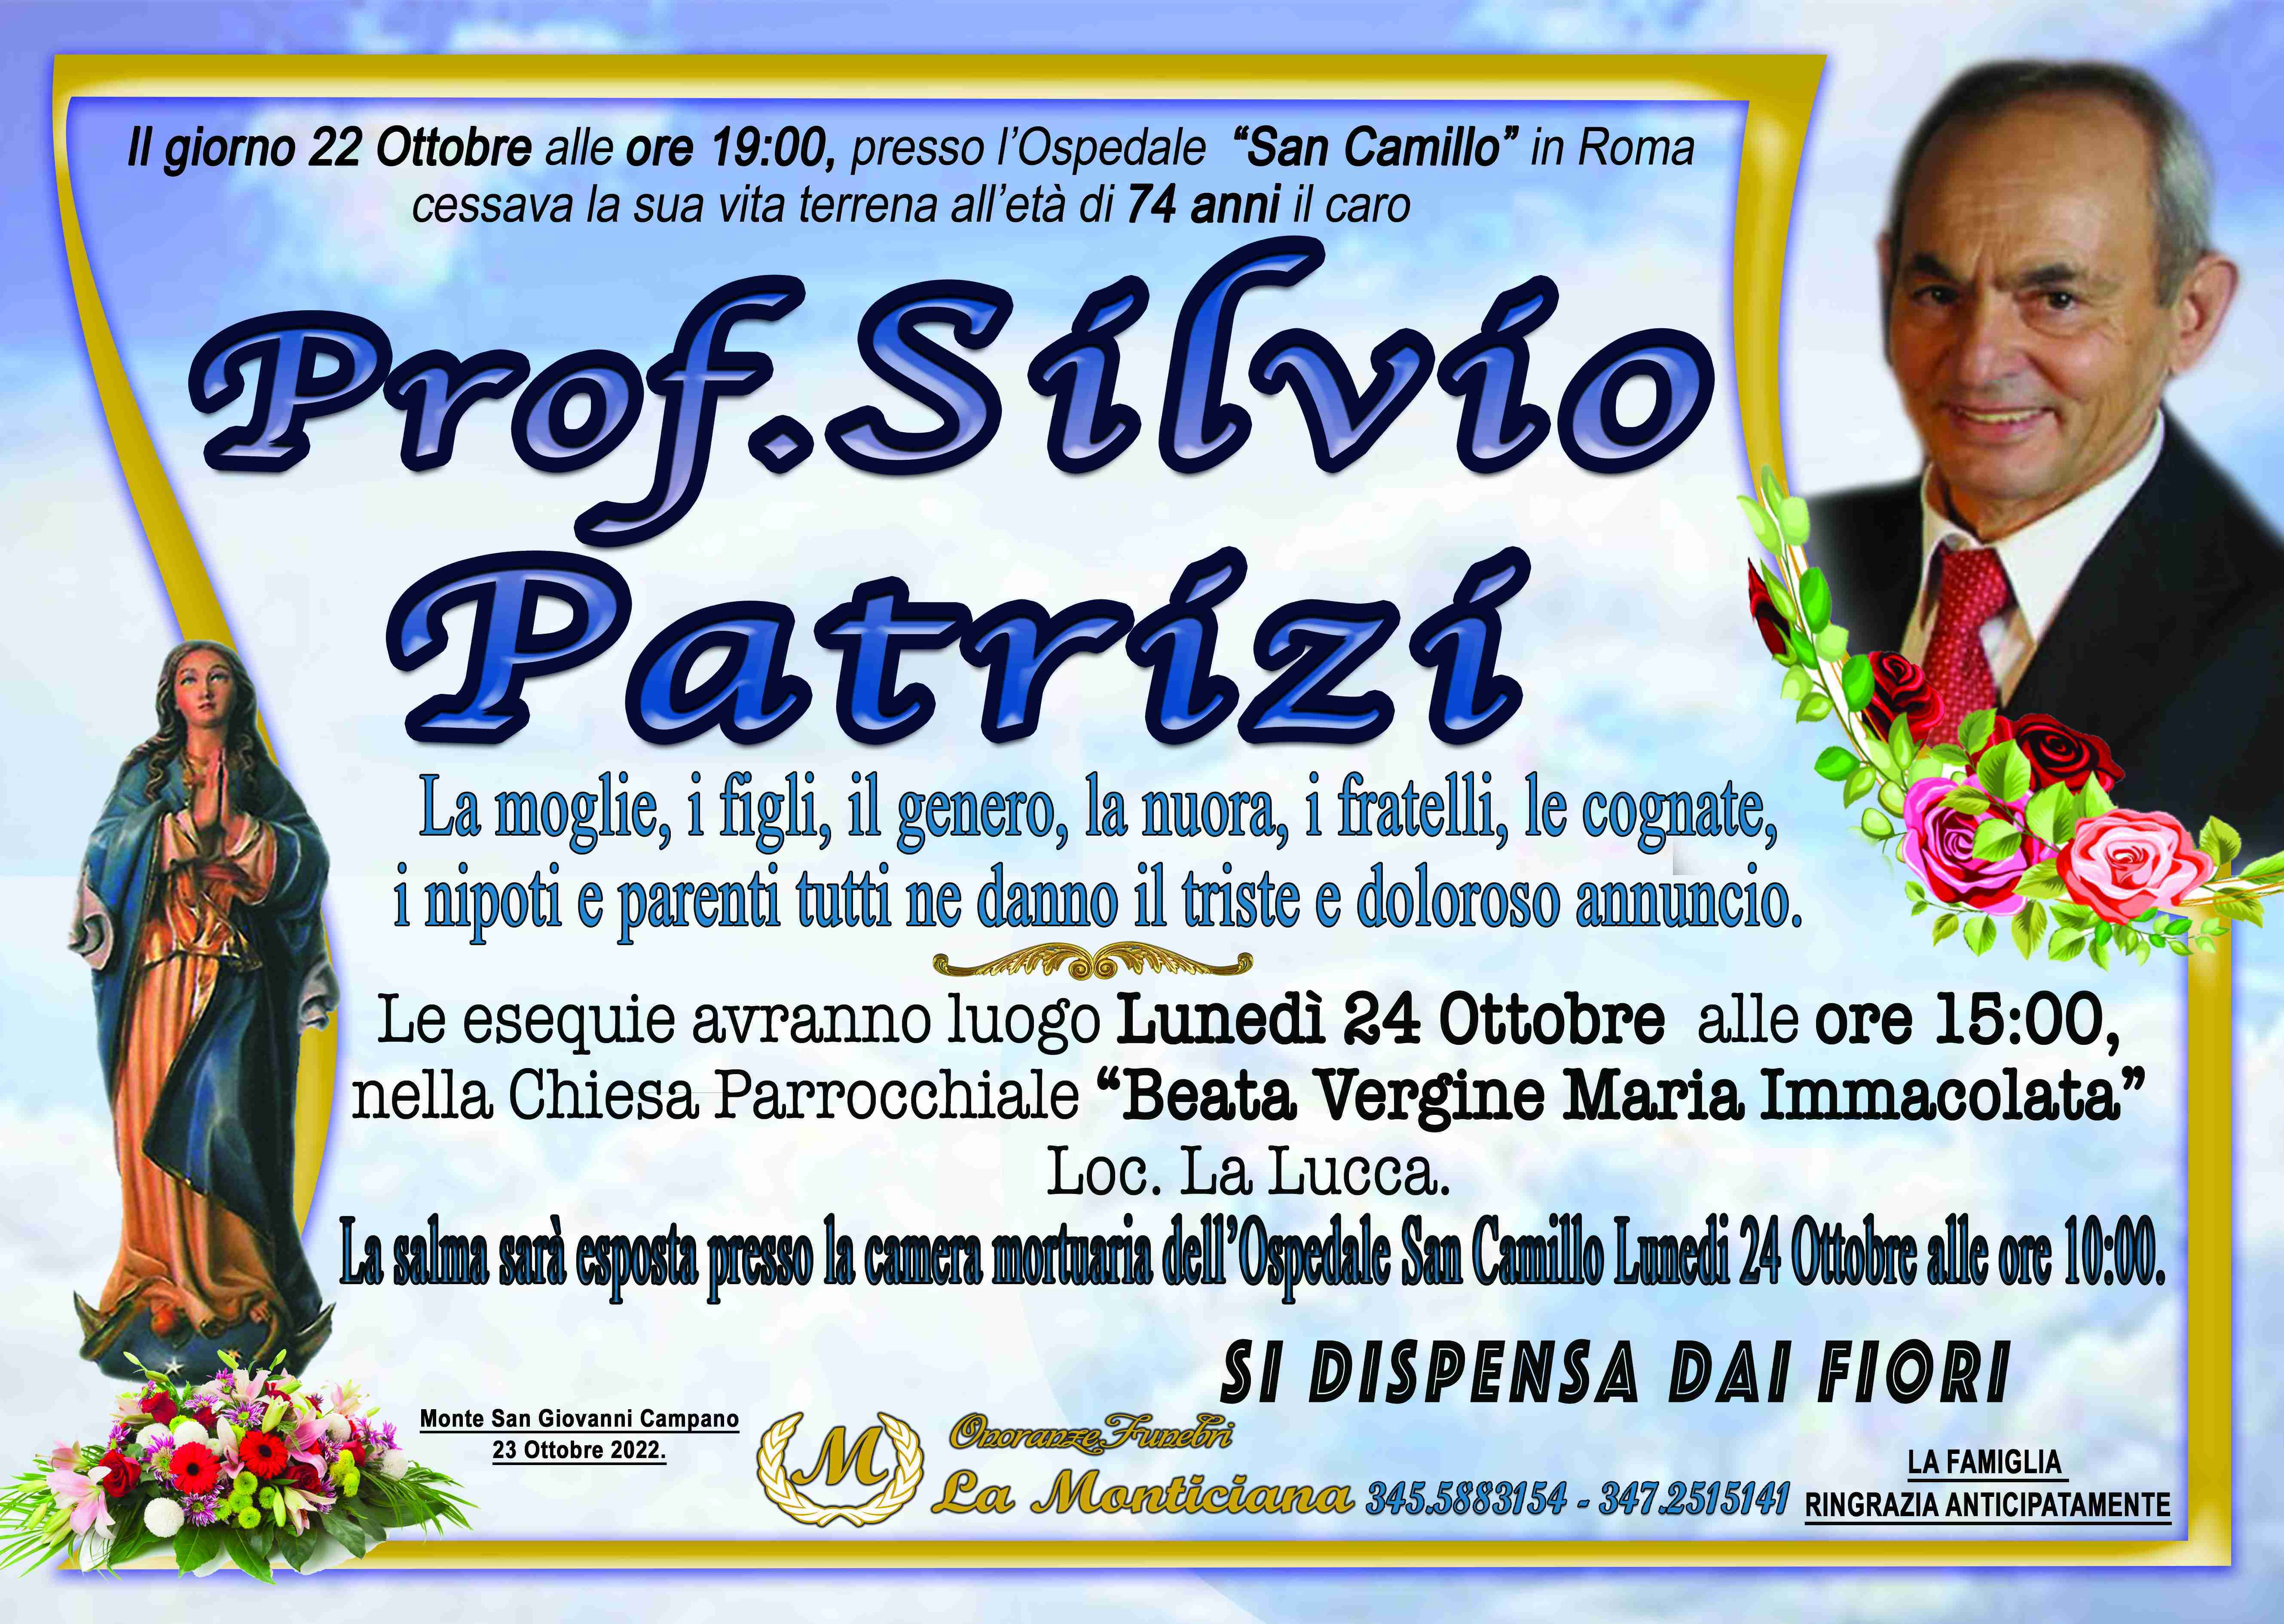 Silvio Patrizi